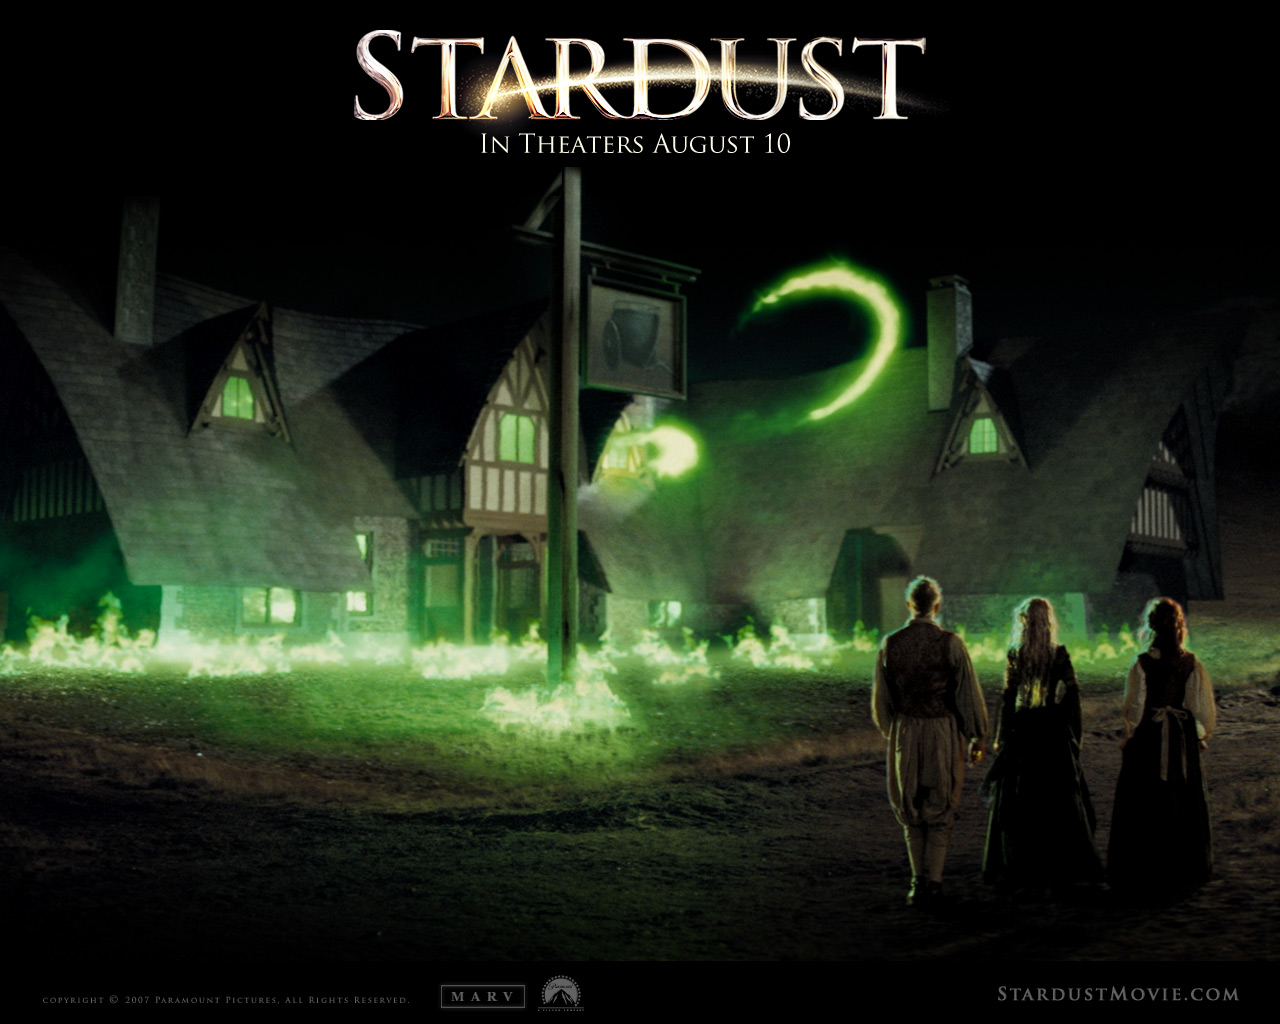 Stardust - Upcoming Movies Wallpaper 122595 - Fanpop